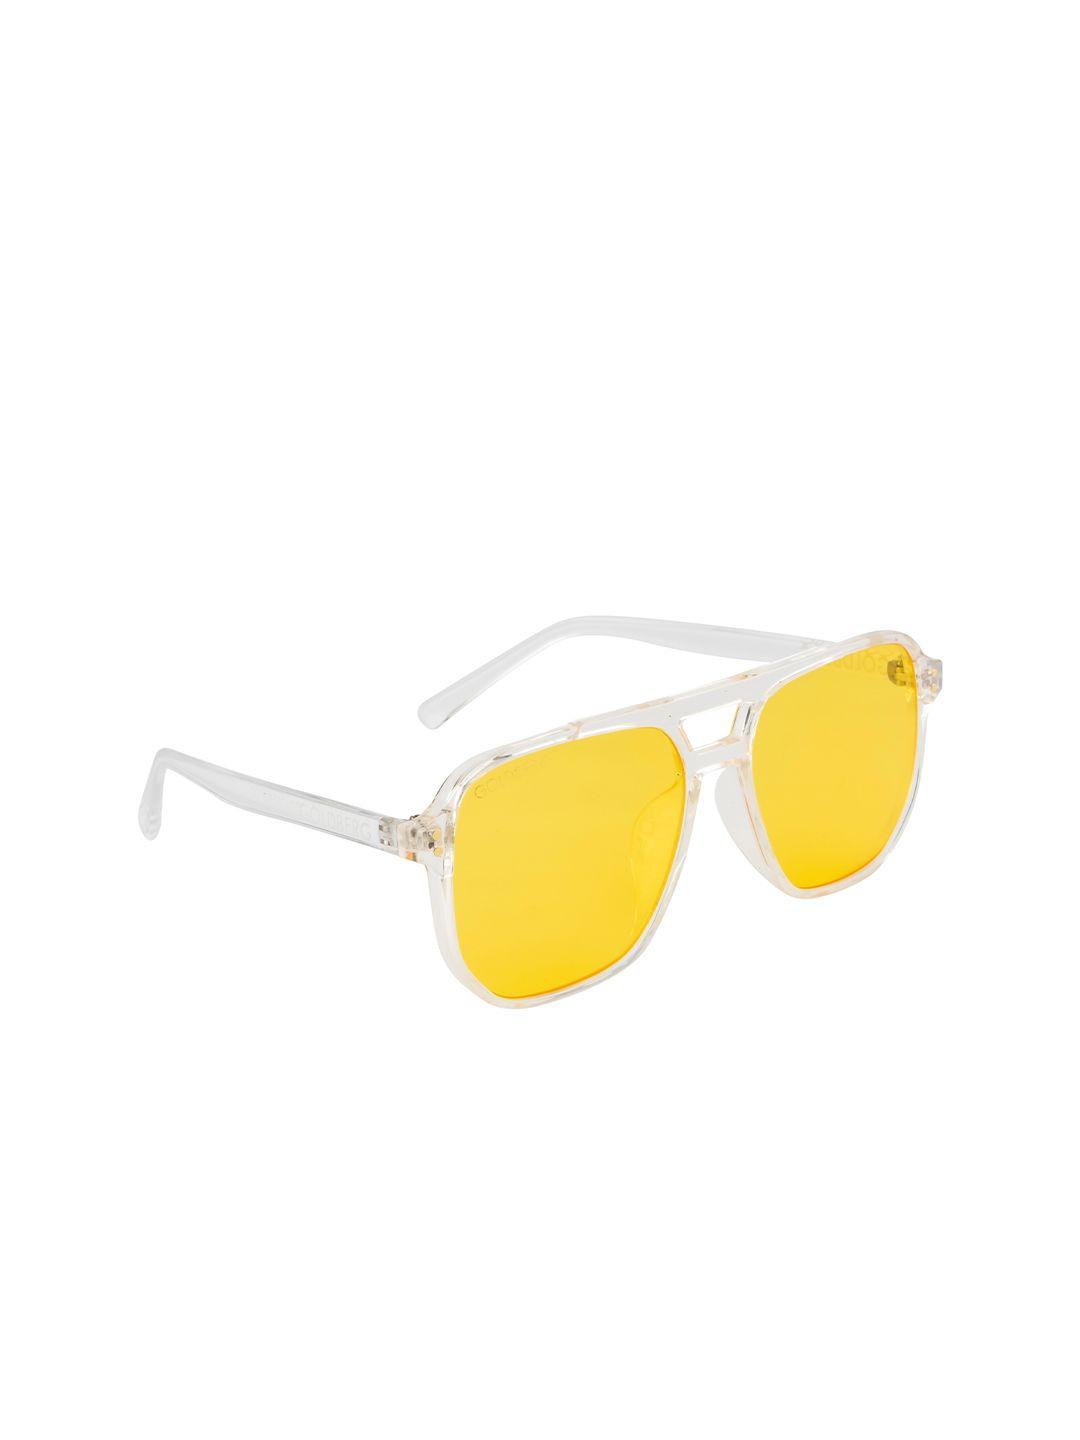 gold berg unisex yellow lens & white aviator sunglasses with uv protected lens